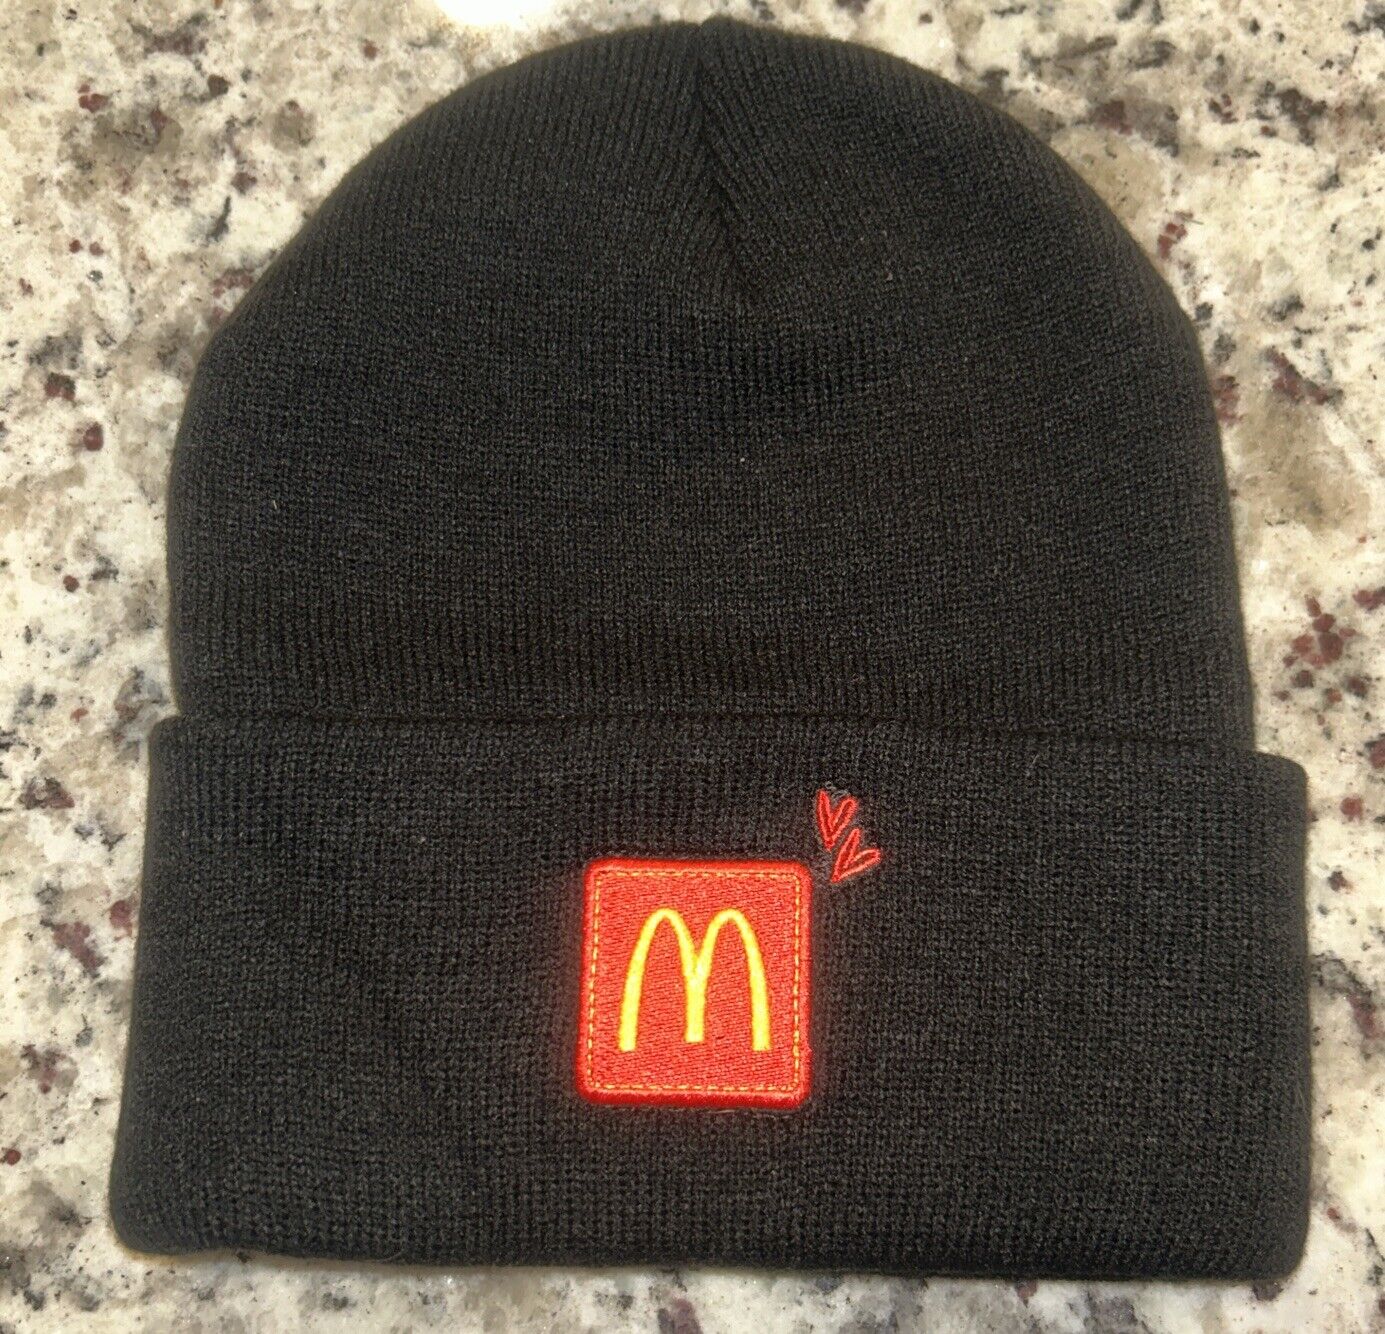 McDonalds Mariah Carey Beanie Hat limited edition 